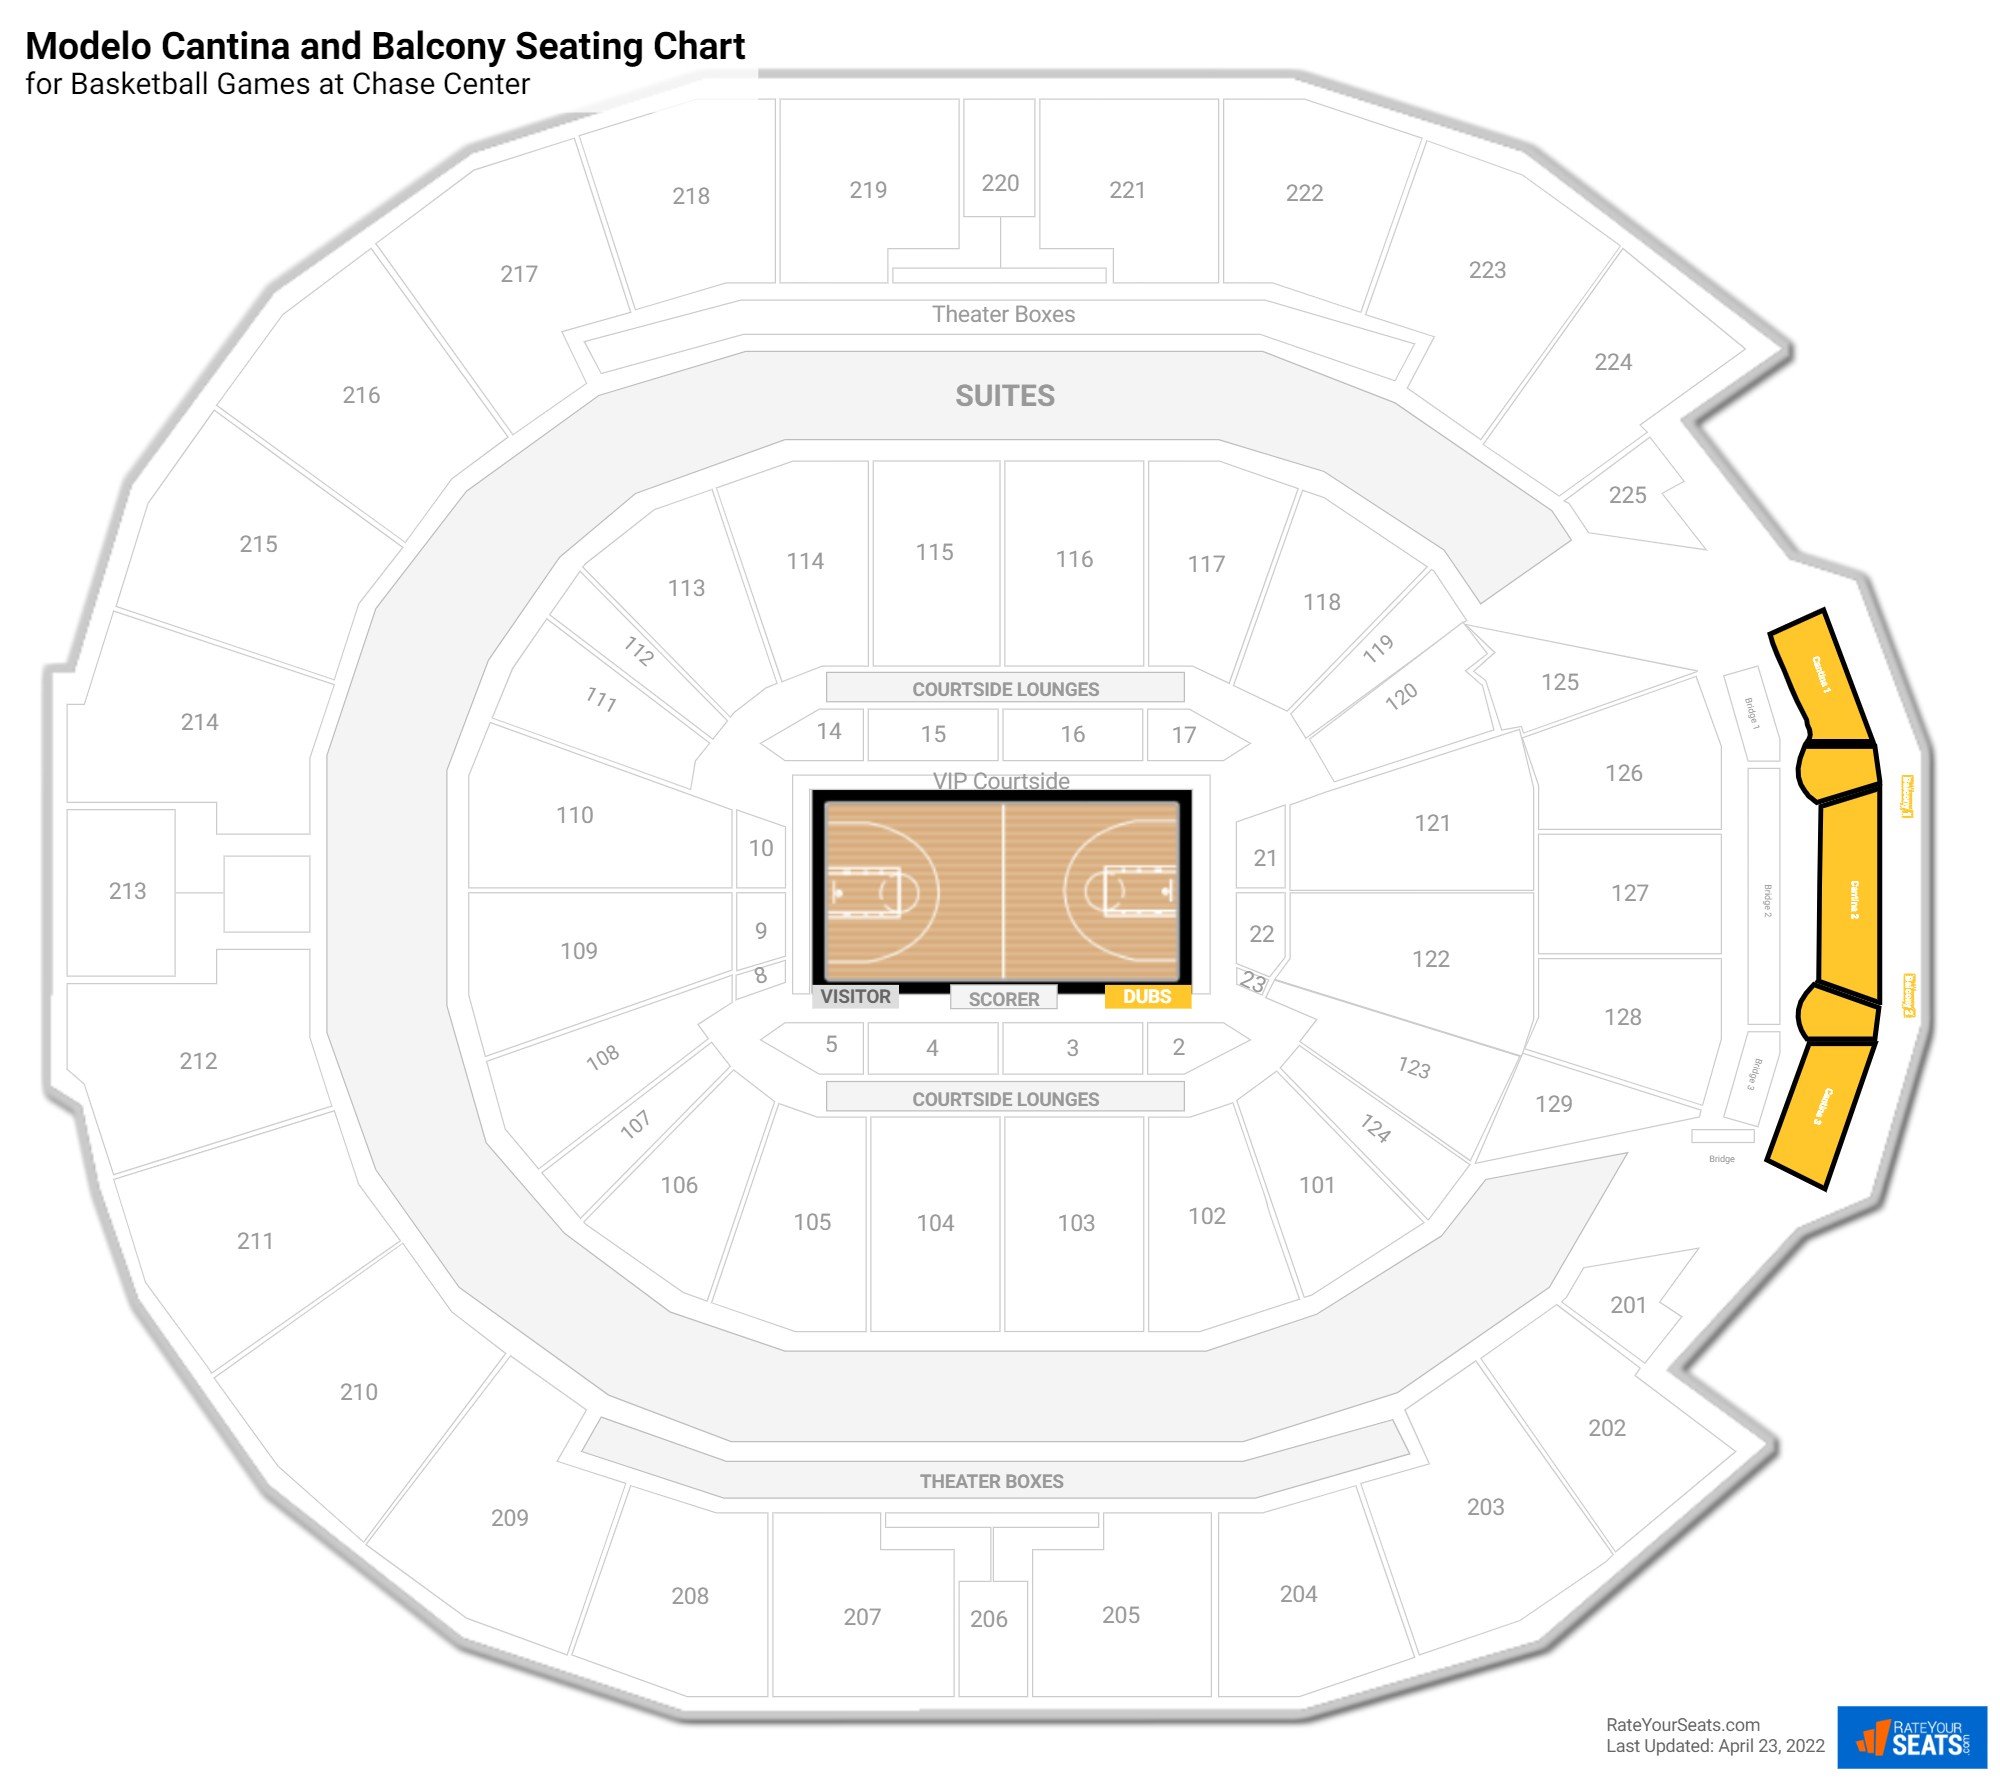 Basketball Modelo Cantina and Balcony Seating Chart at Chase Center